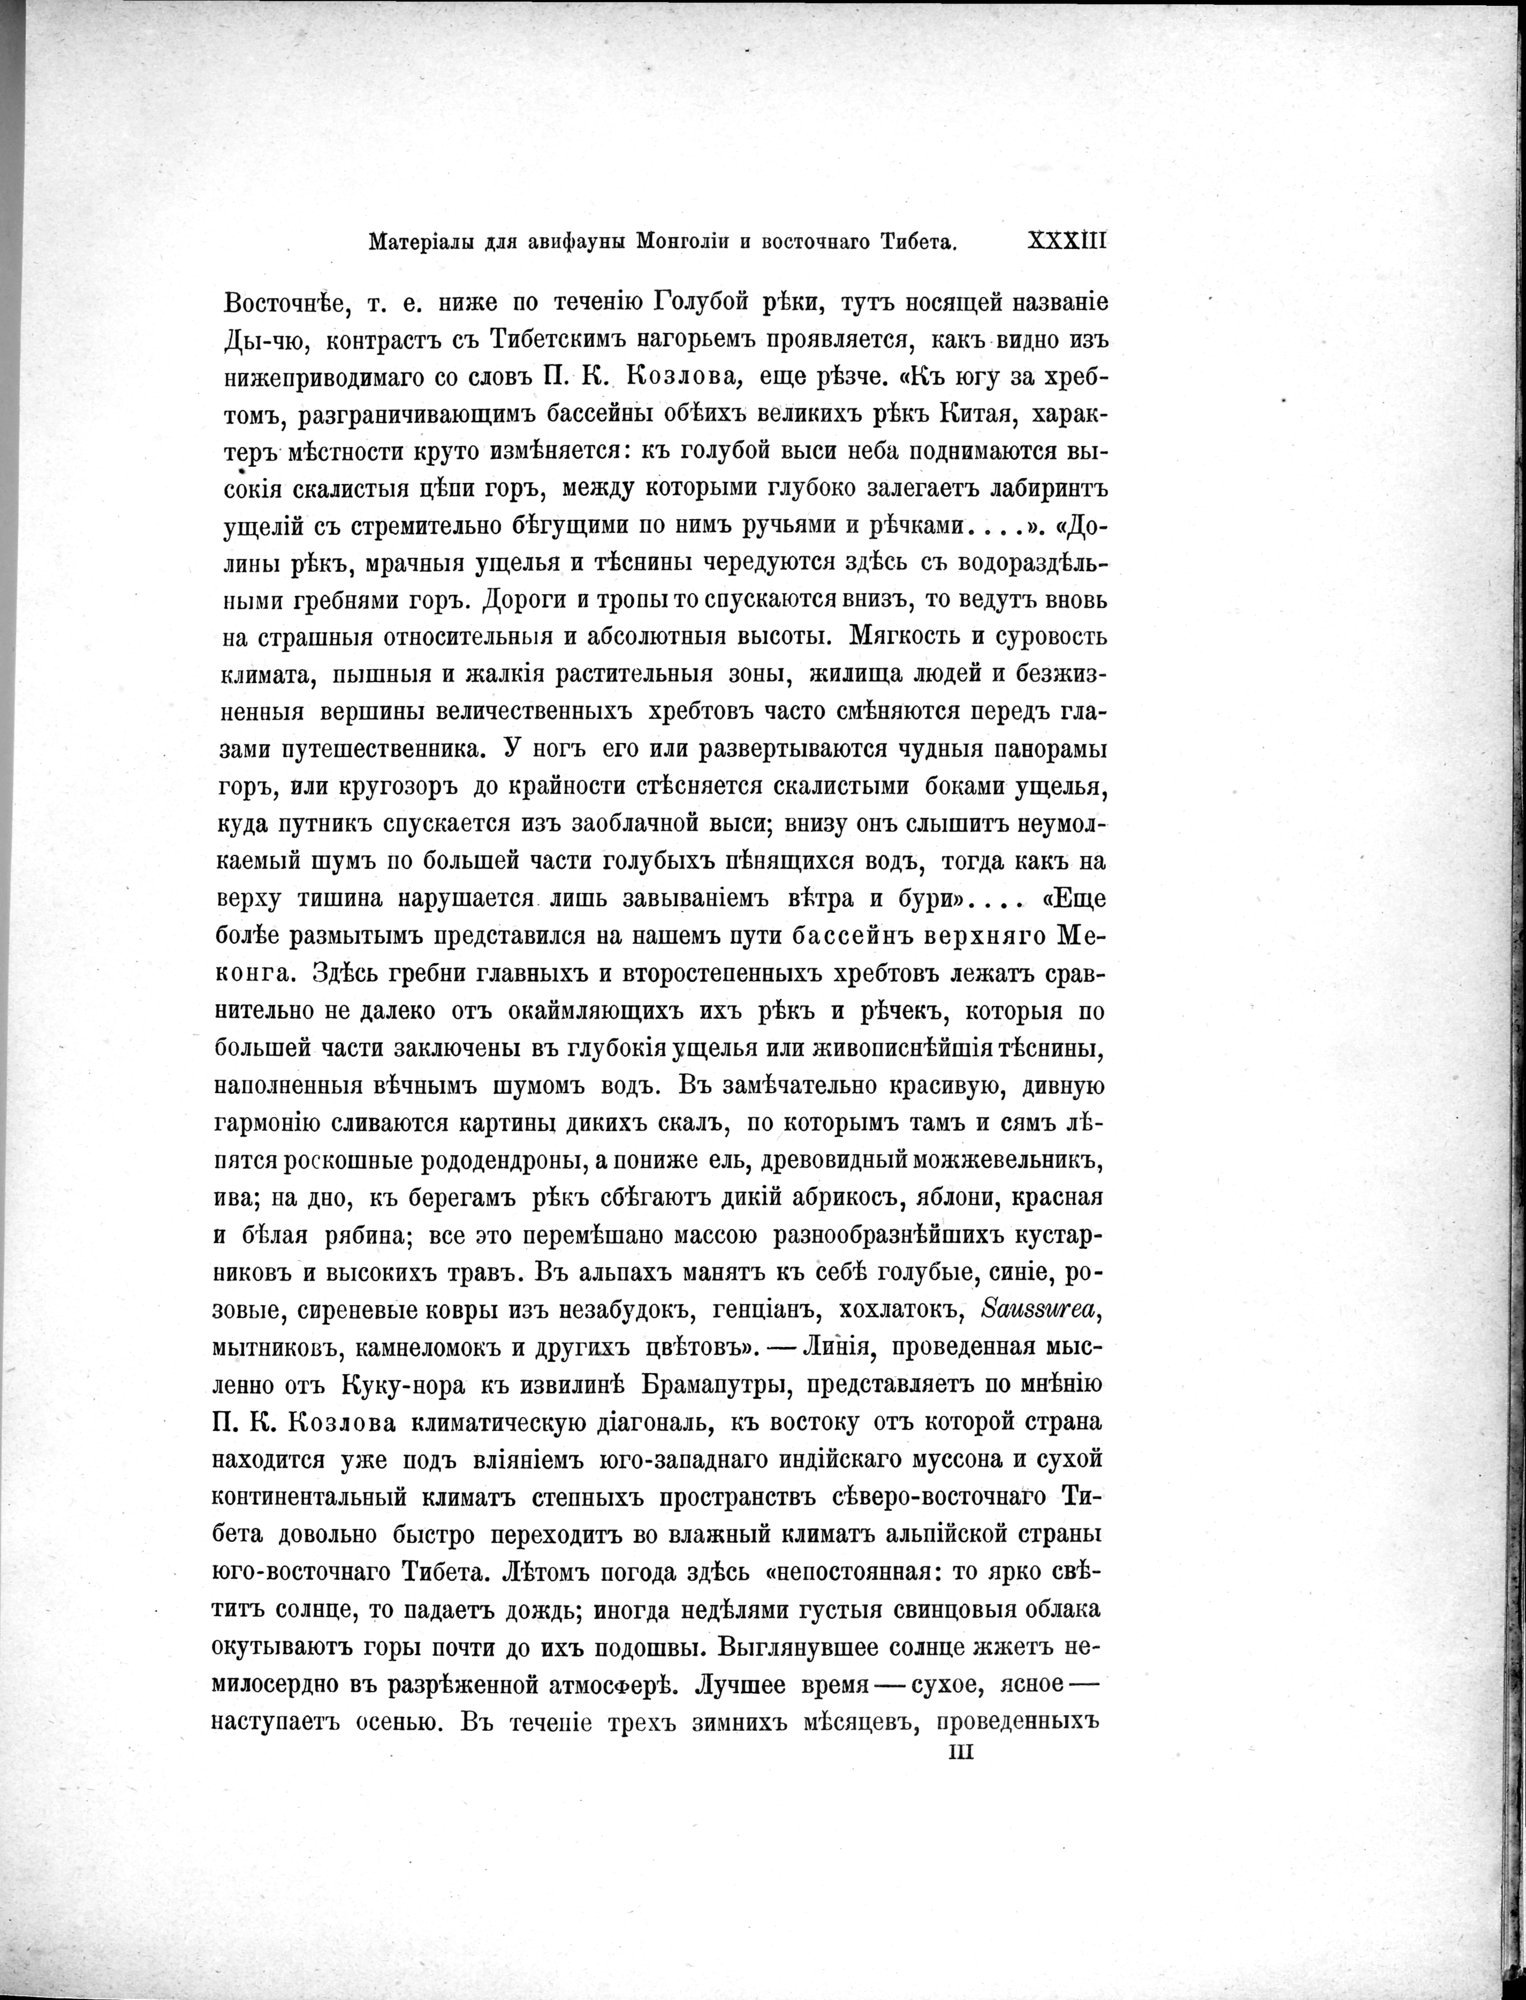 Mongoliia i Kam : vol.5 / Page 47 (Grayscale High Resolution Image)